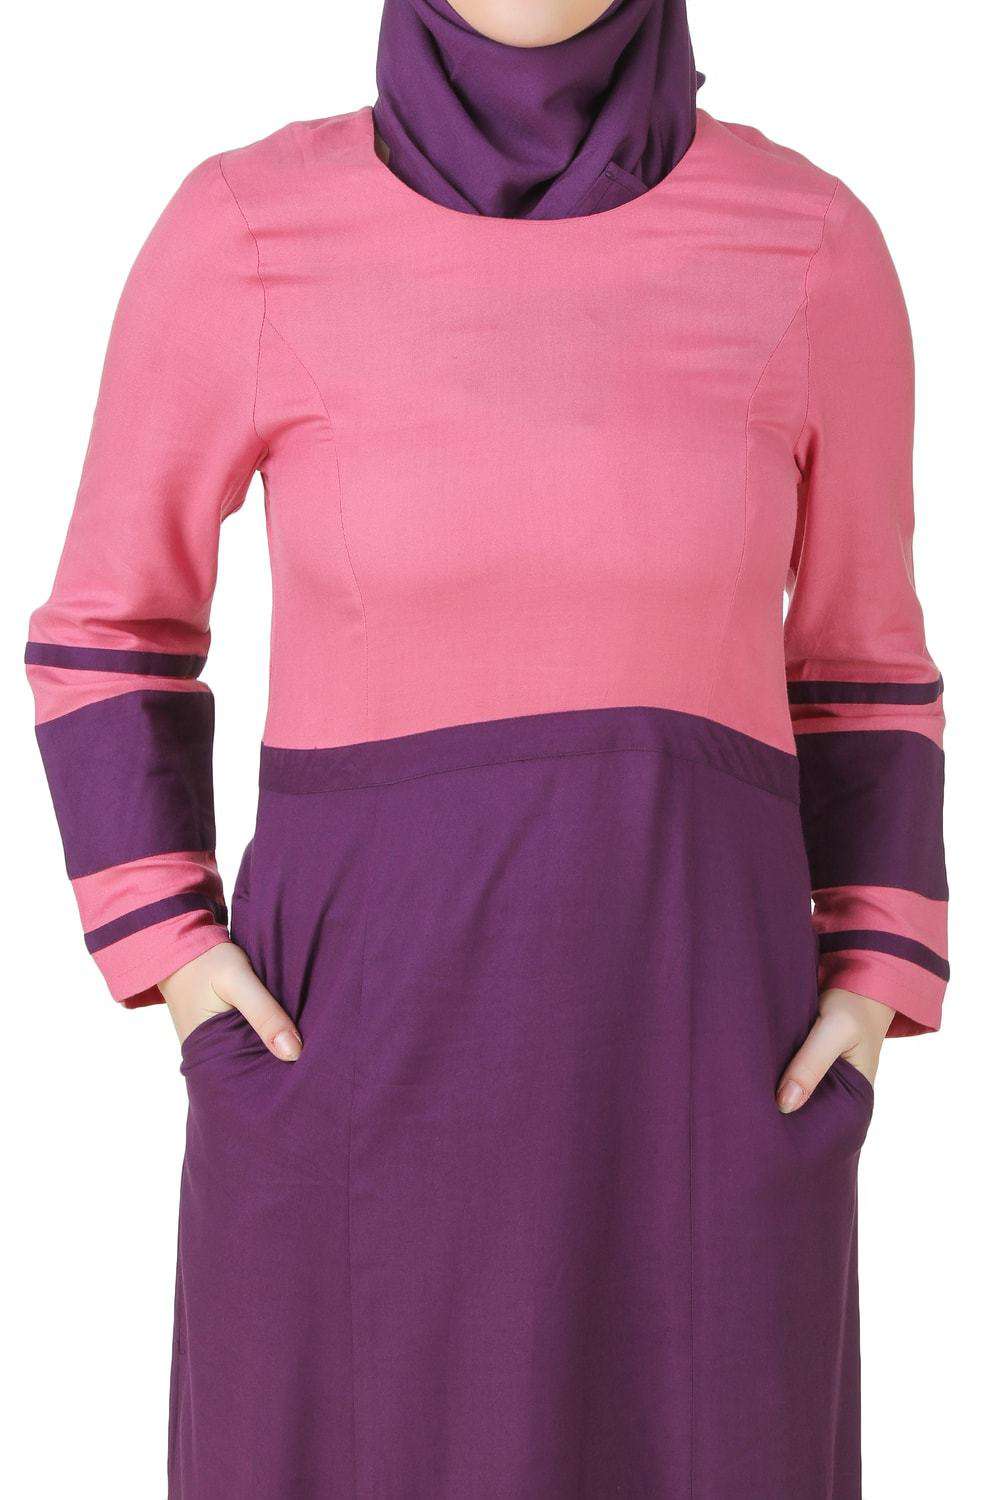 Noreen Pink & Purple Rayon Abaya Front Design